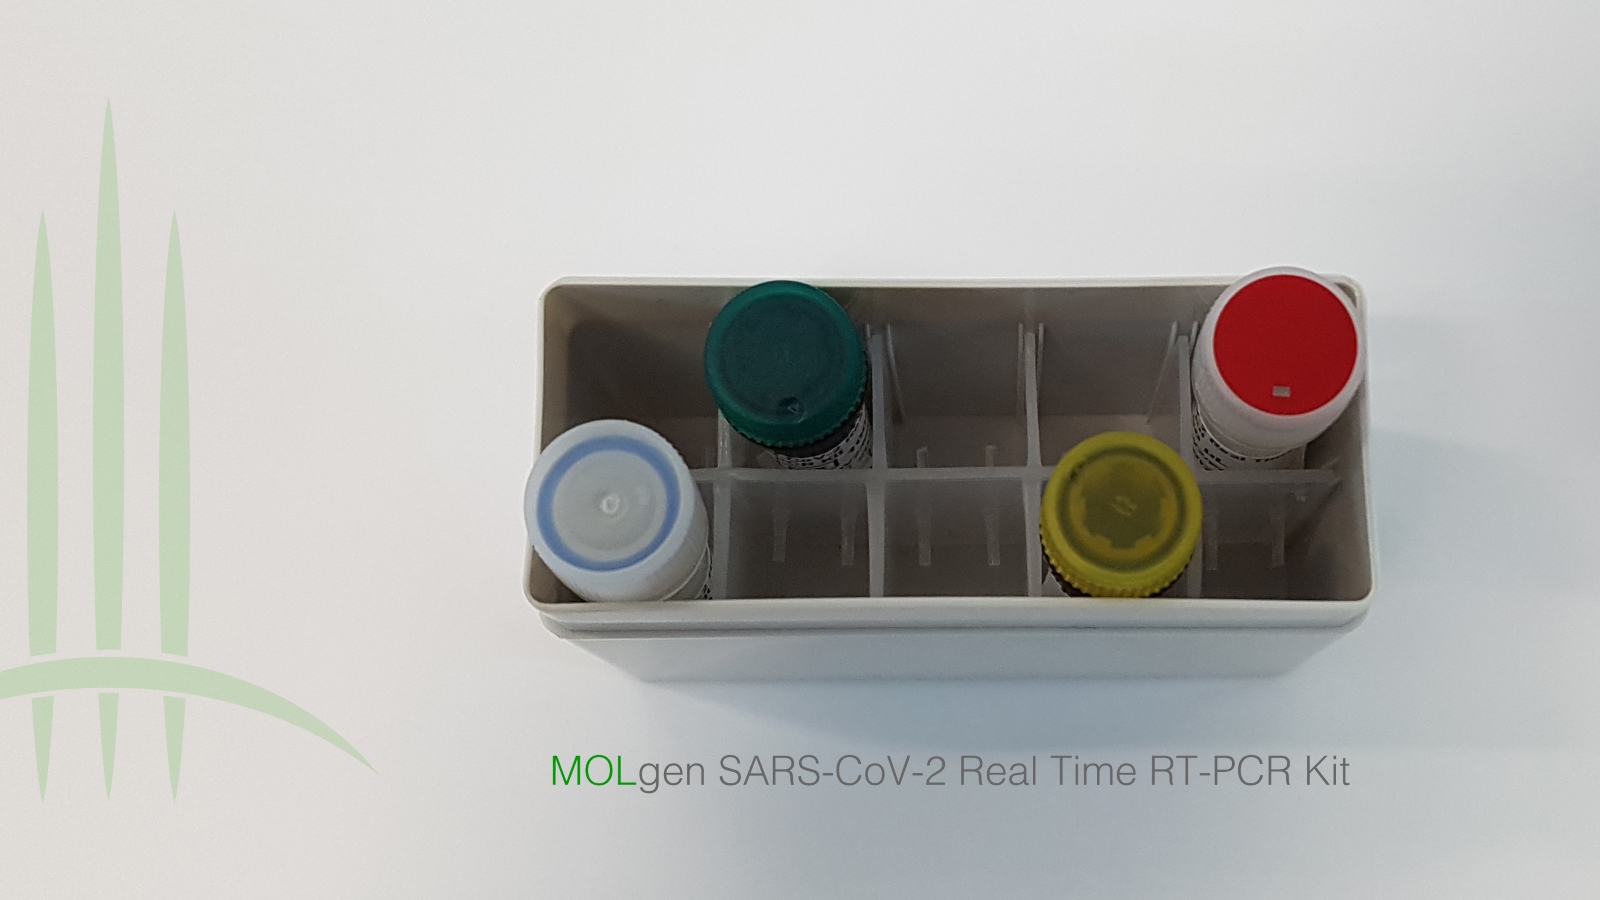 BATM’s fast-results RT-PCR kit for SARS-CoV-2. Photo: courtesy